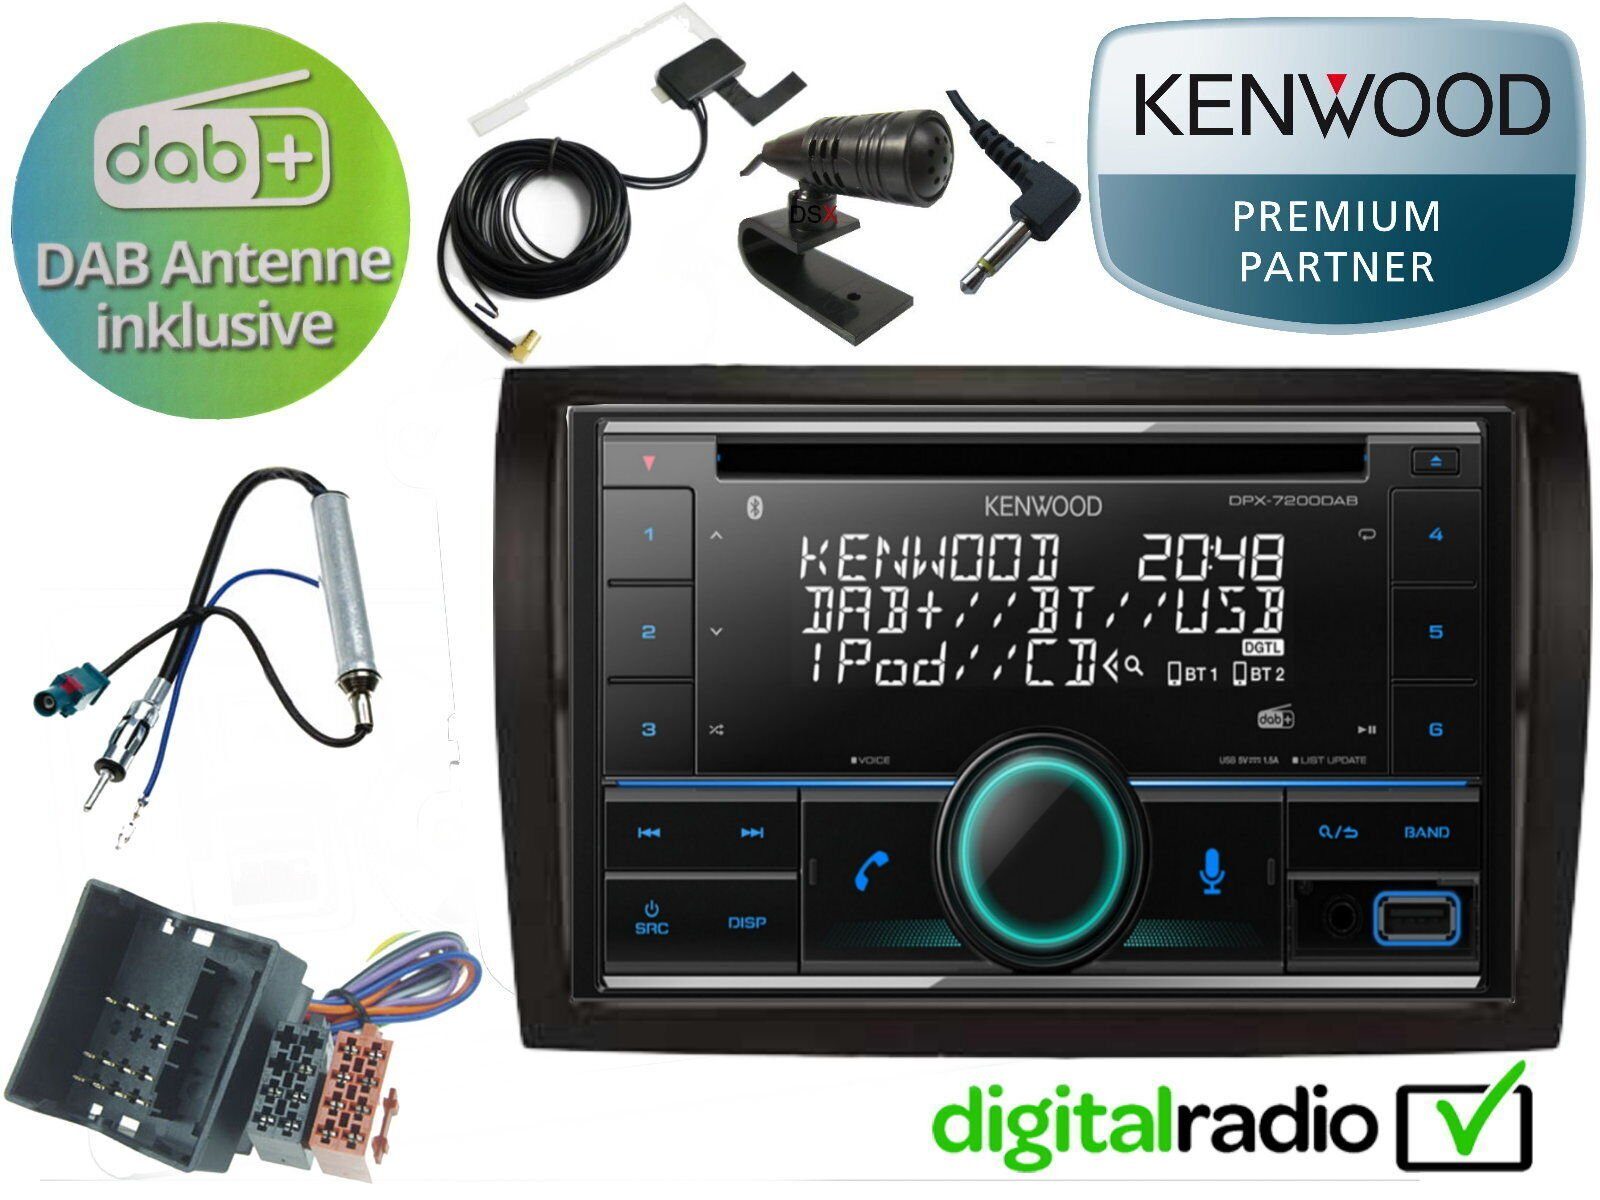 DSX Kenwood Jumper USB (Digitalradio CD (DAB) Antenne Bluetooth inkl DAB+ Citroen für Autoradio